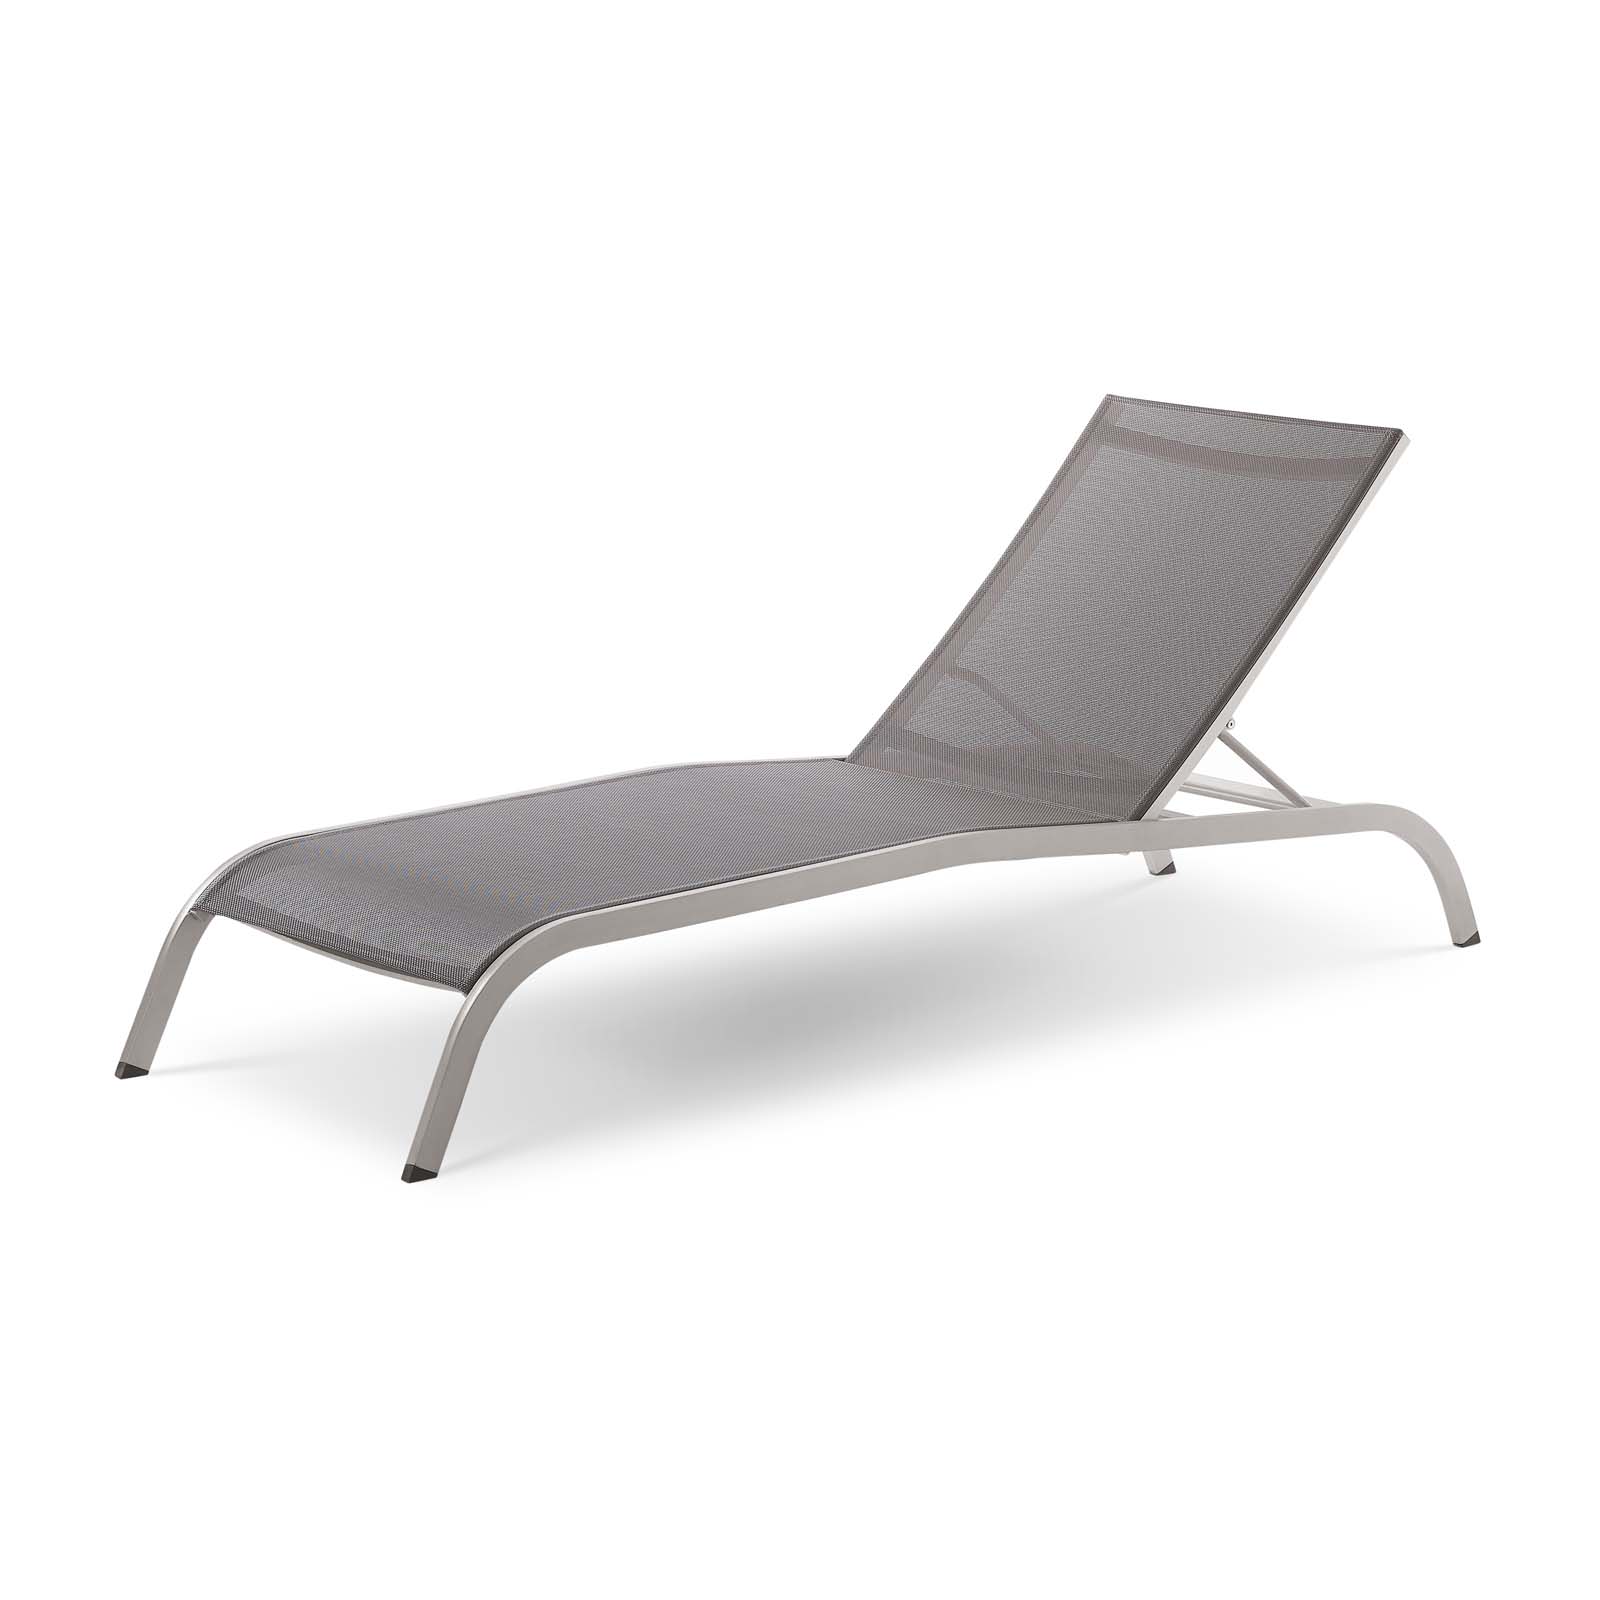 Contemporary Modern Urban Designer Outdoor Patio Balcony Garden Furniture Lounge Lounge Chair, Aluminum, Grey Gray - image 1 of 7